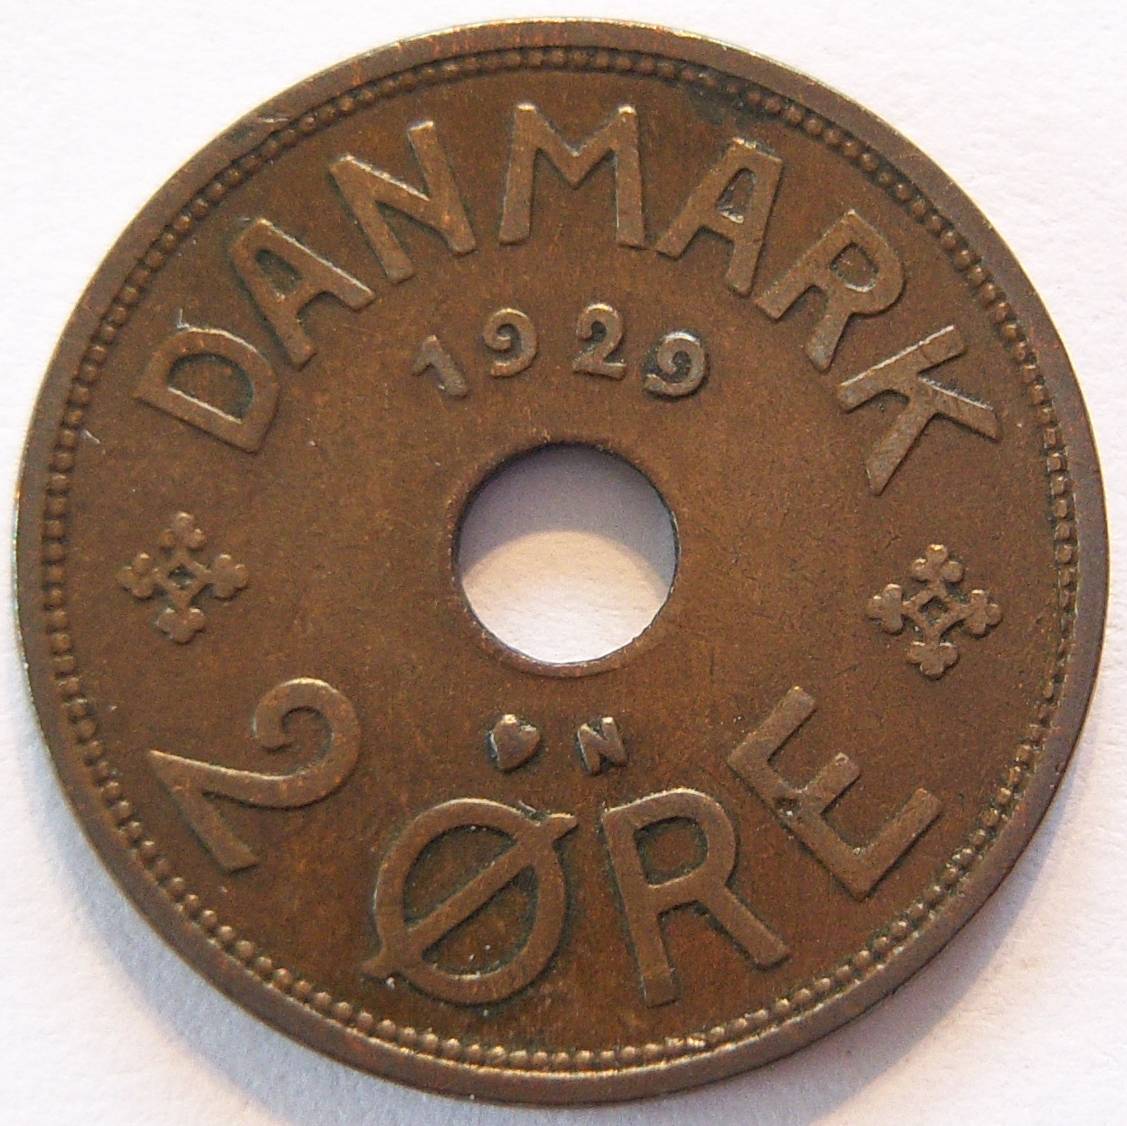  Dänemark 2 Öre 1929   